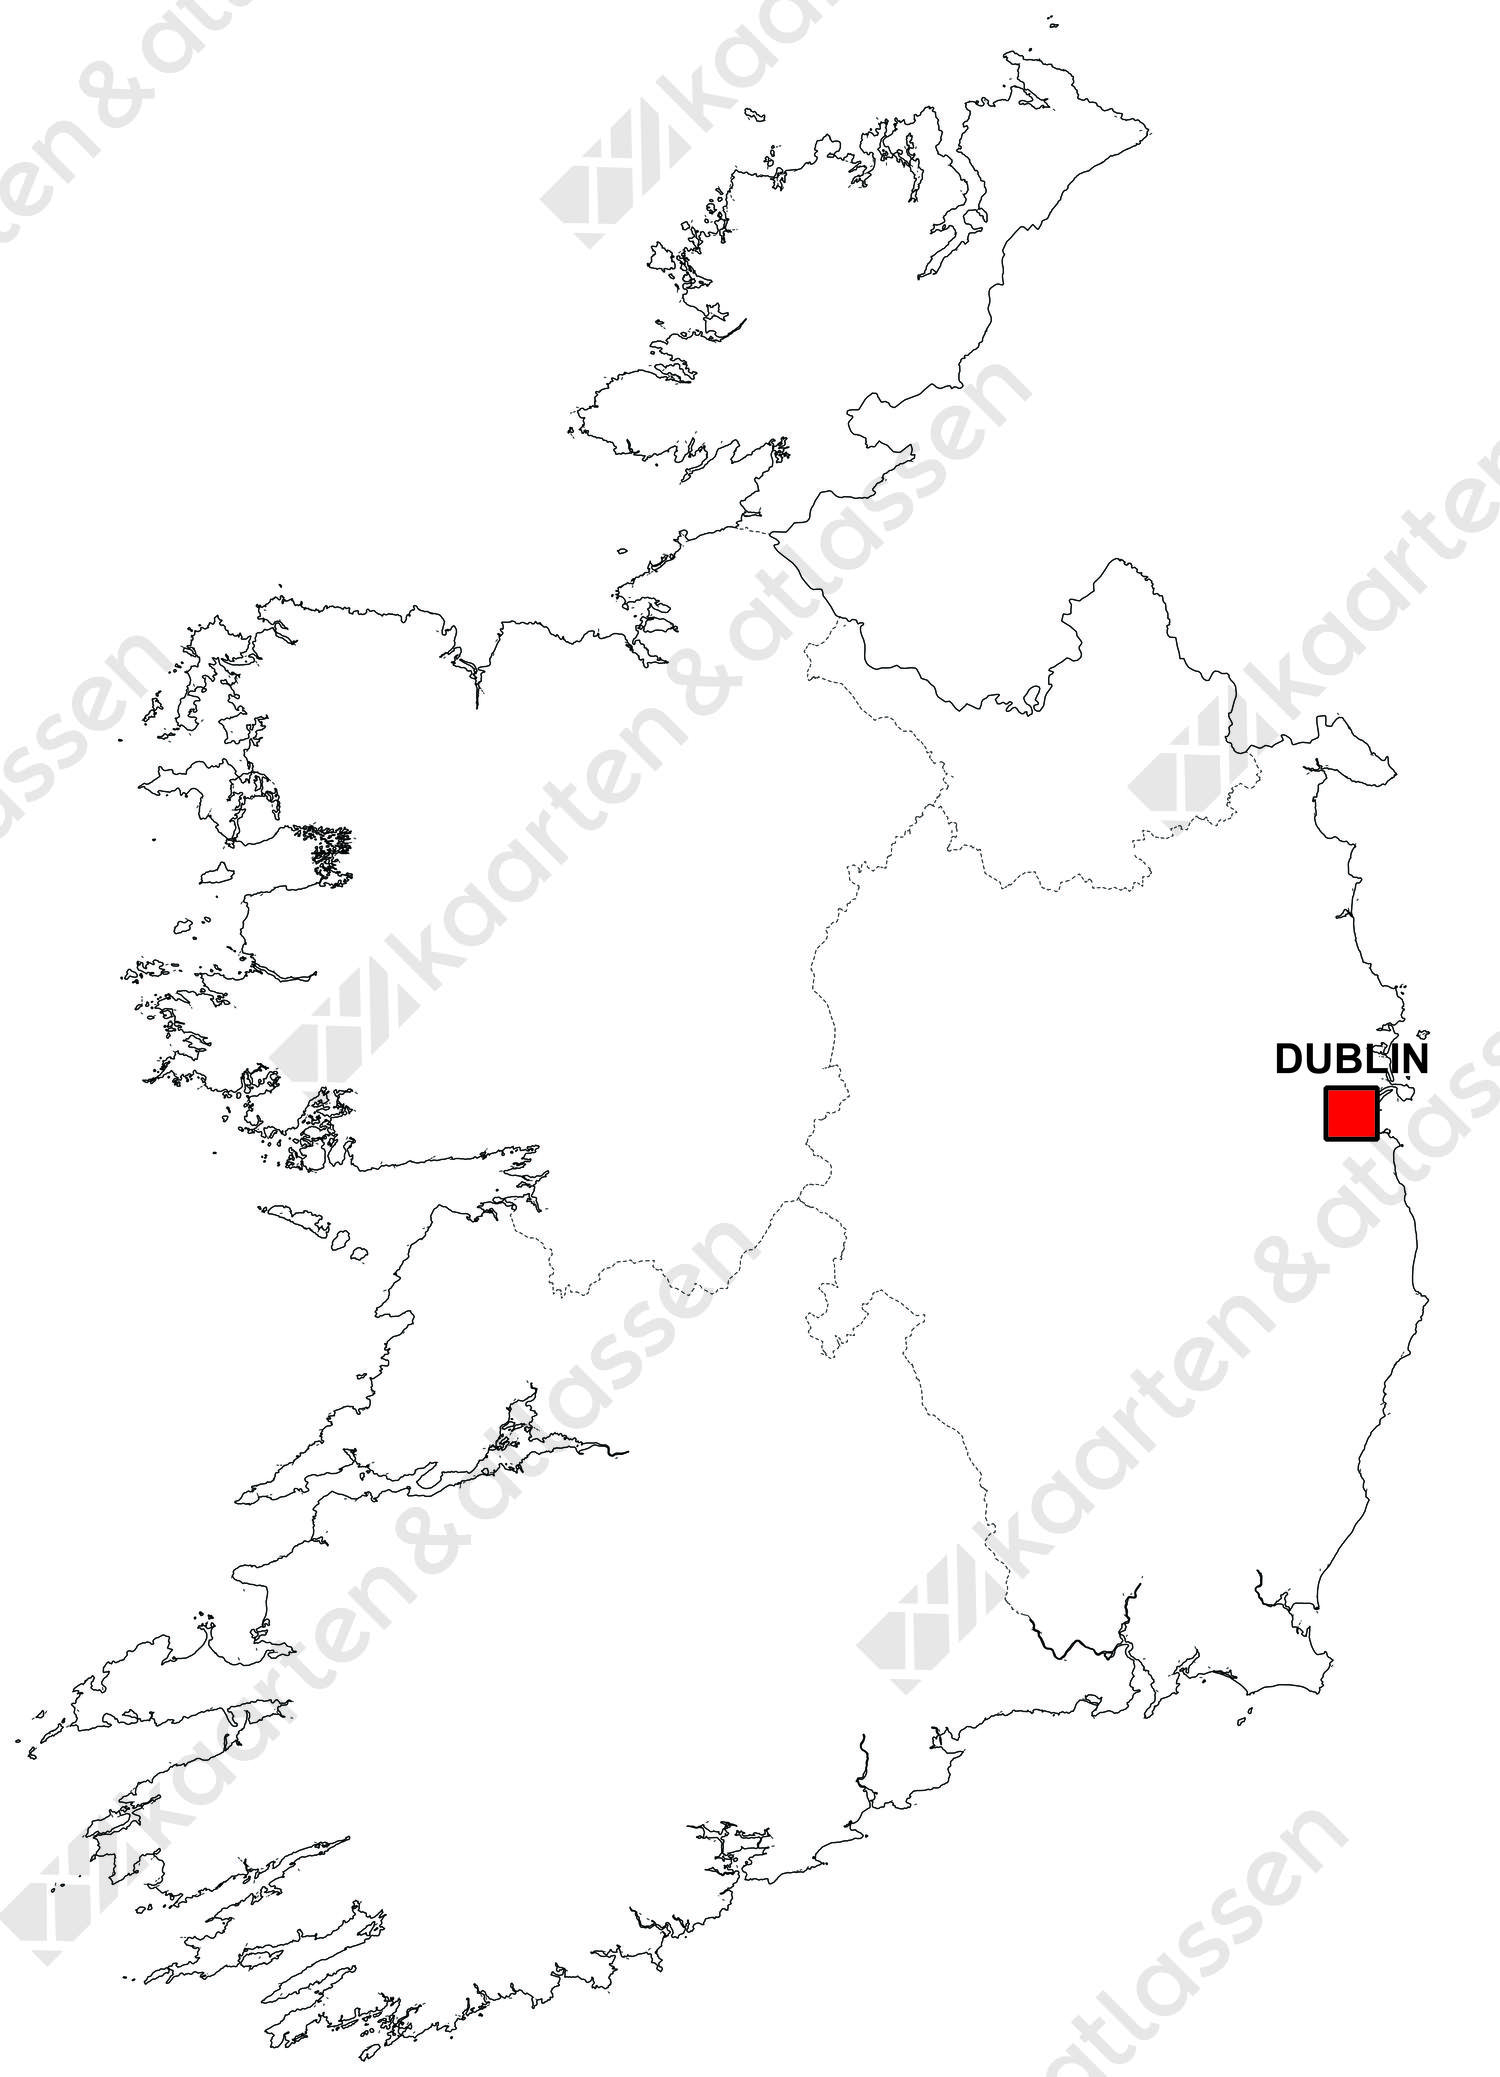 Gratis digitale kaart Ierland